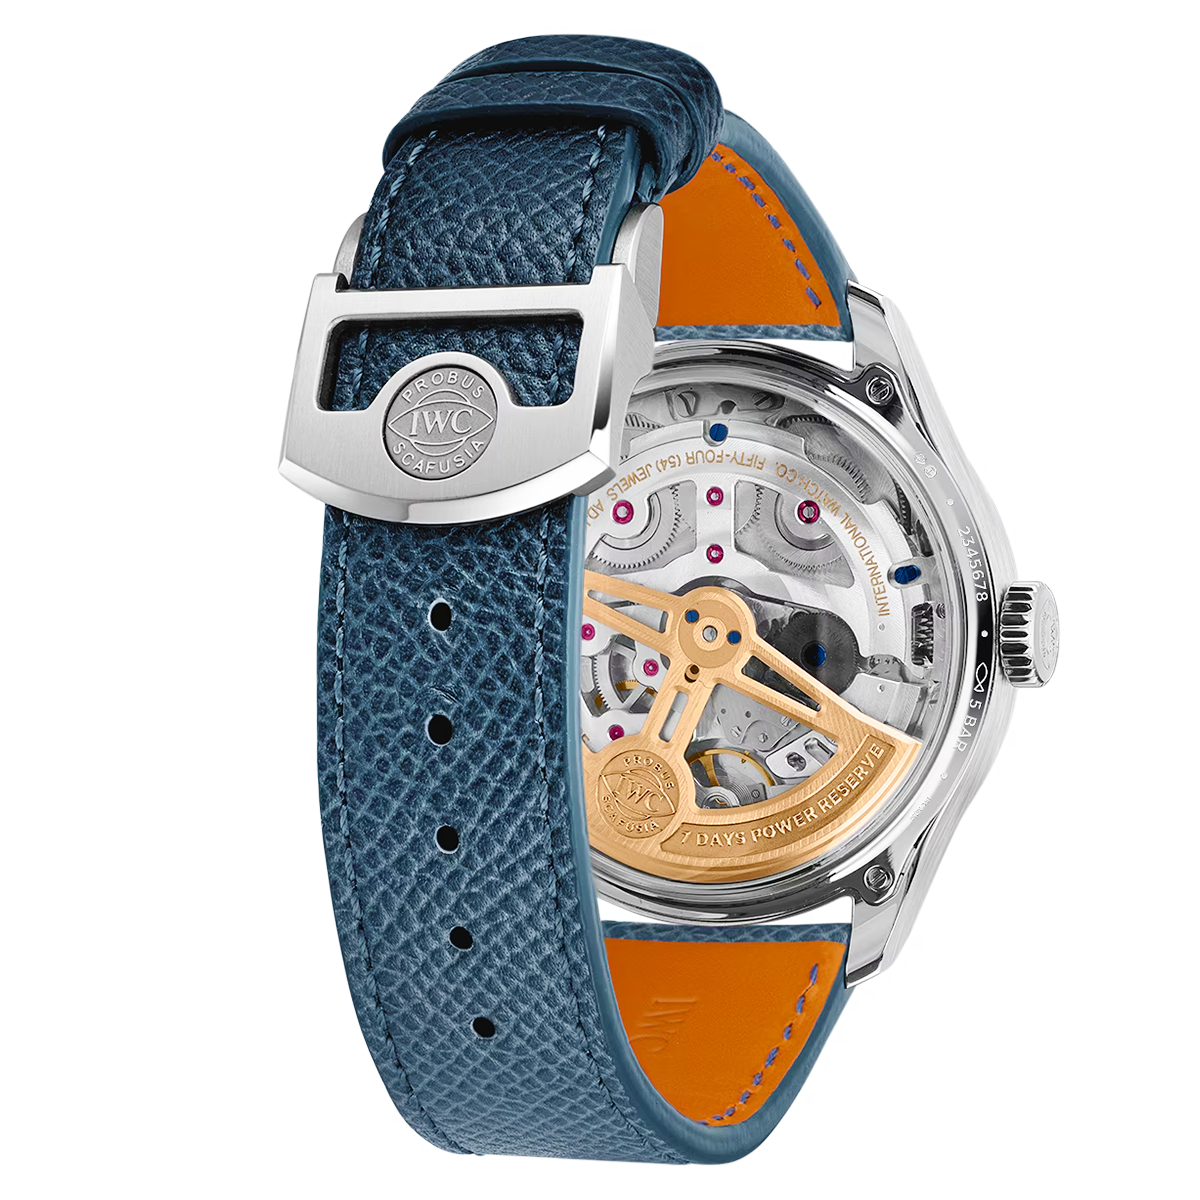 Portugieser 'Horizon Blue' Perpetual Calendar 44mm 18ct White Gold  Watch